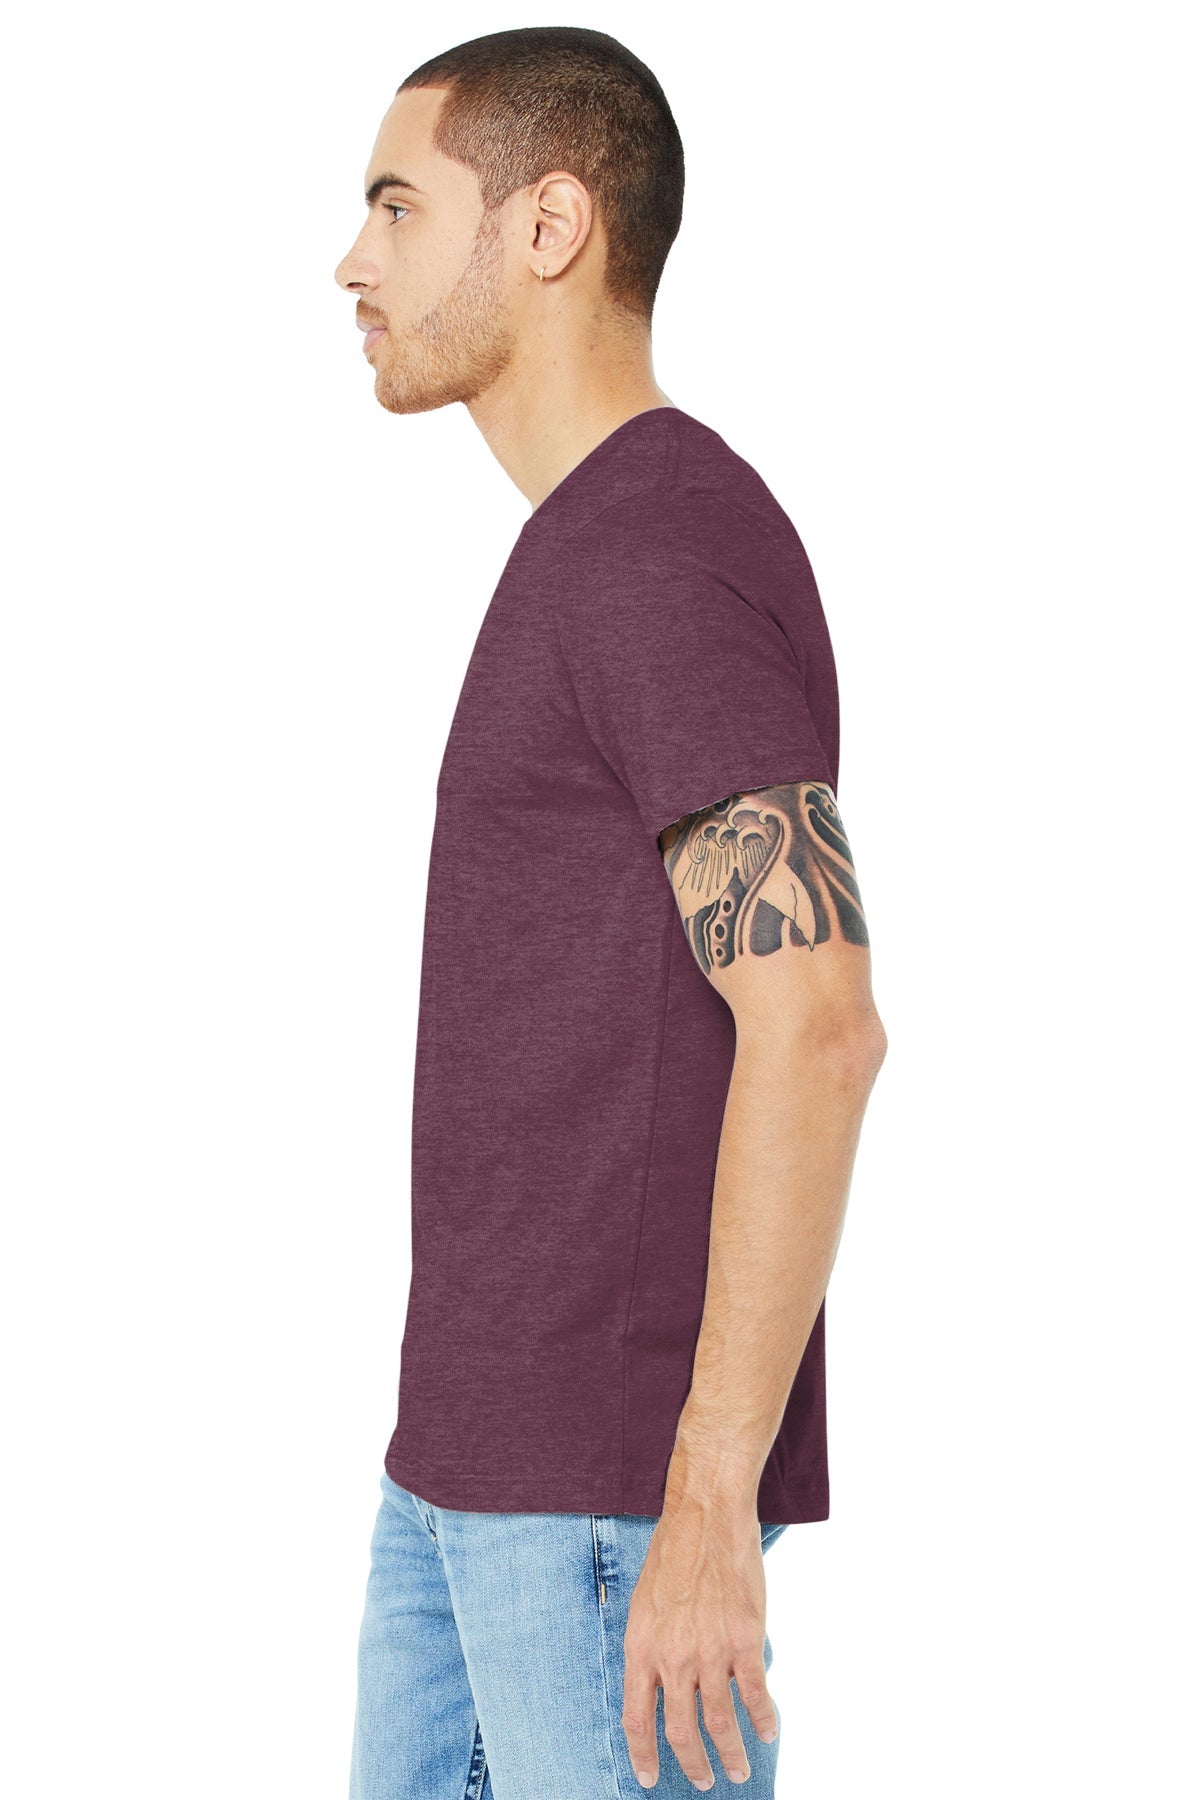 bella + canvas unisex jersey short sleeve t-shirt 3001c heather maroon